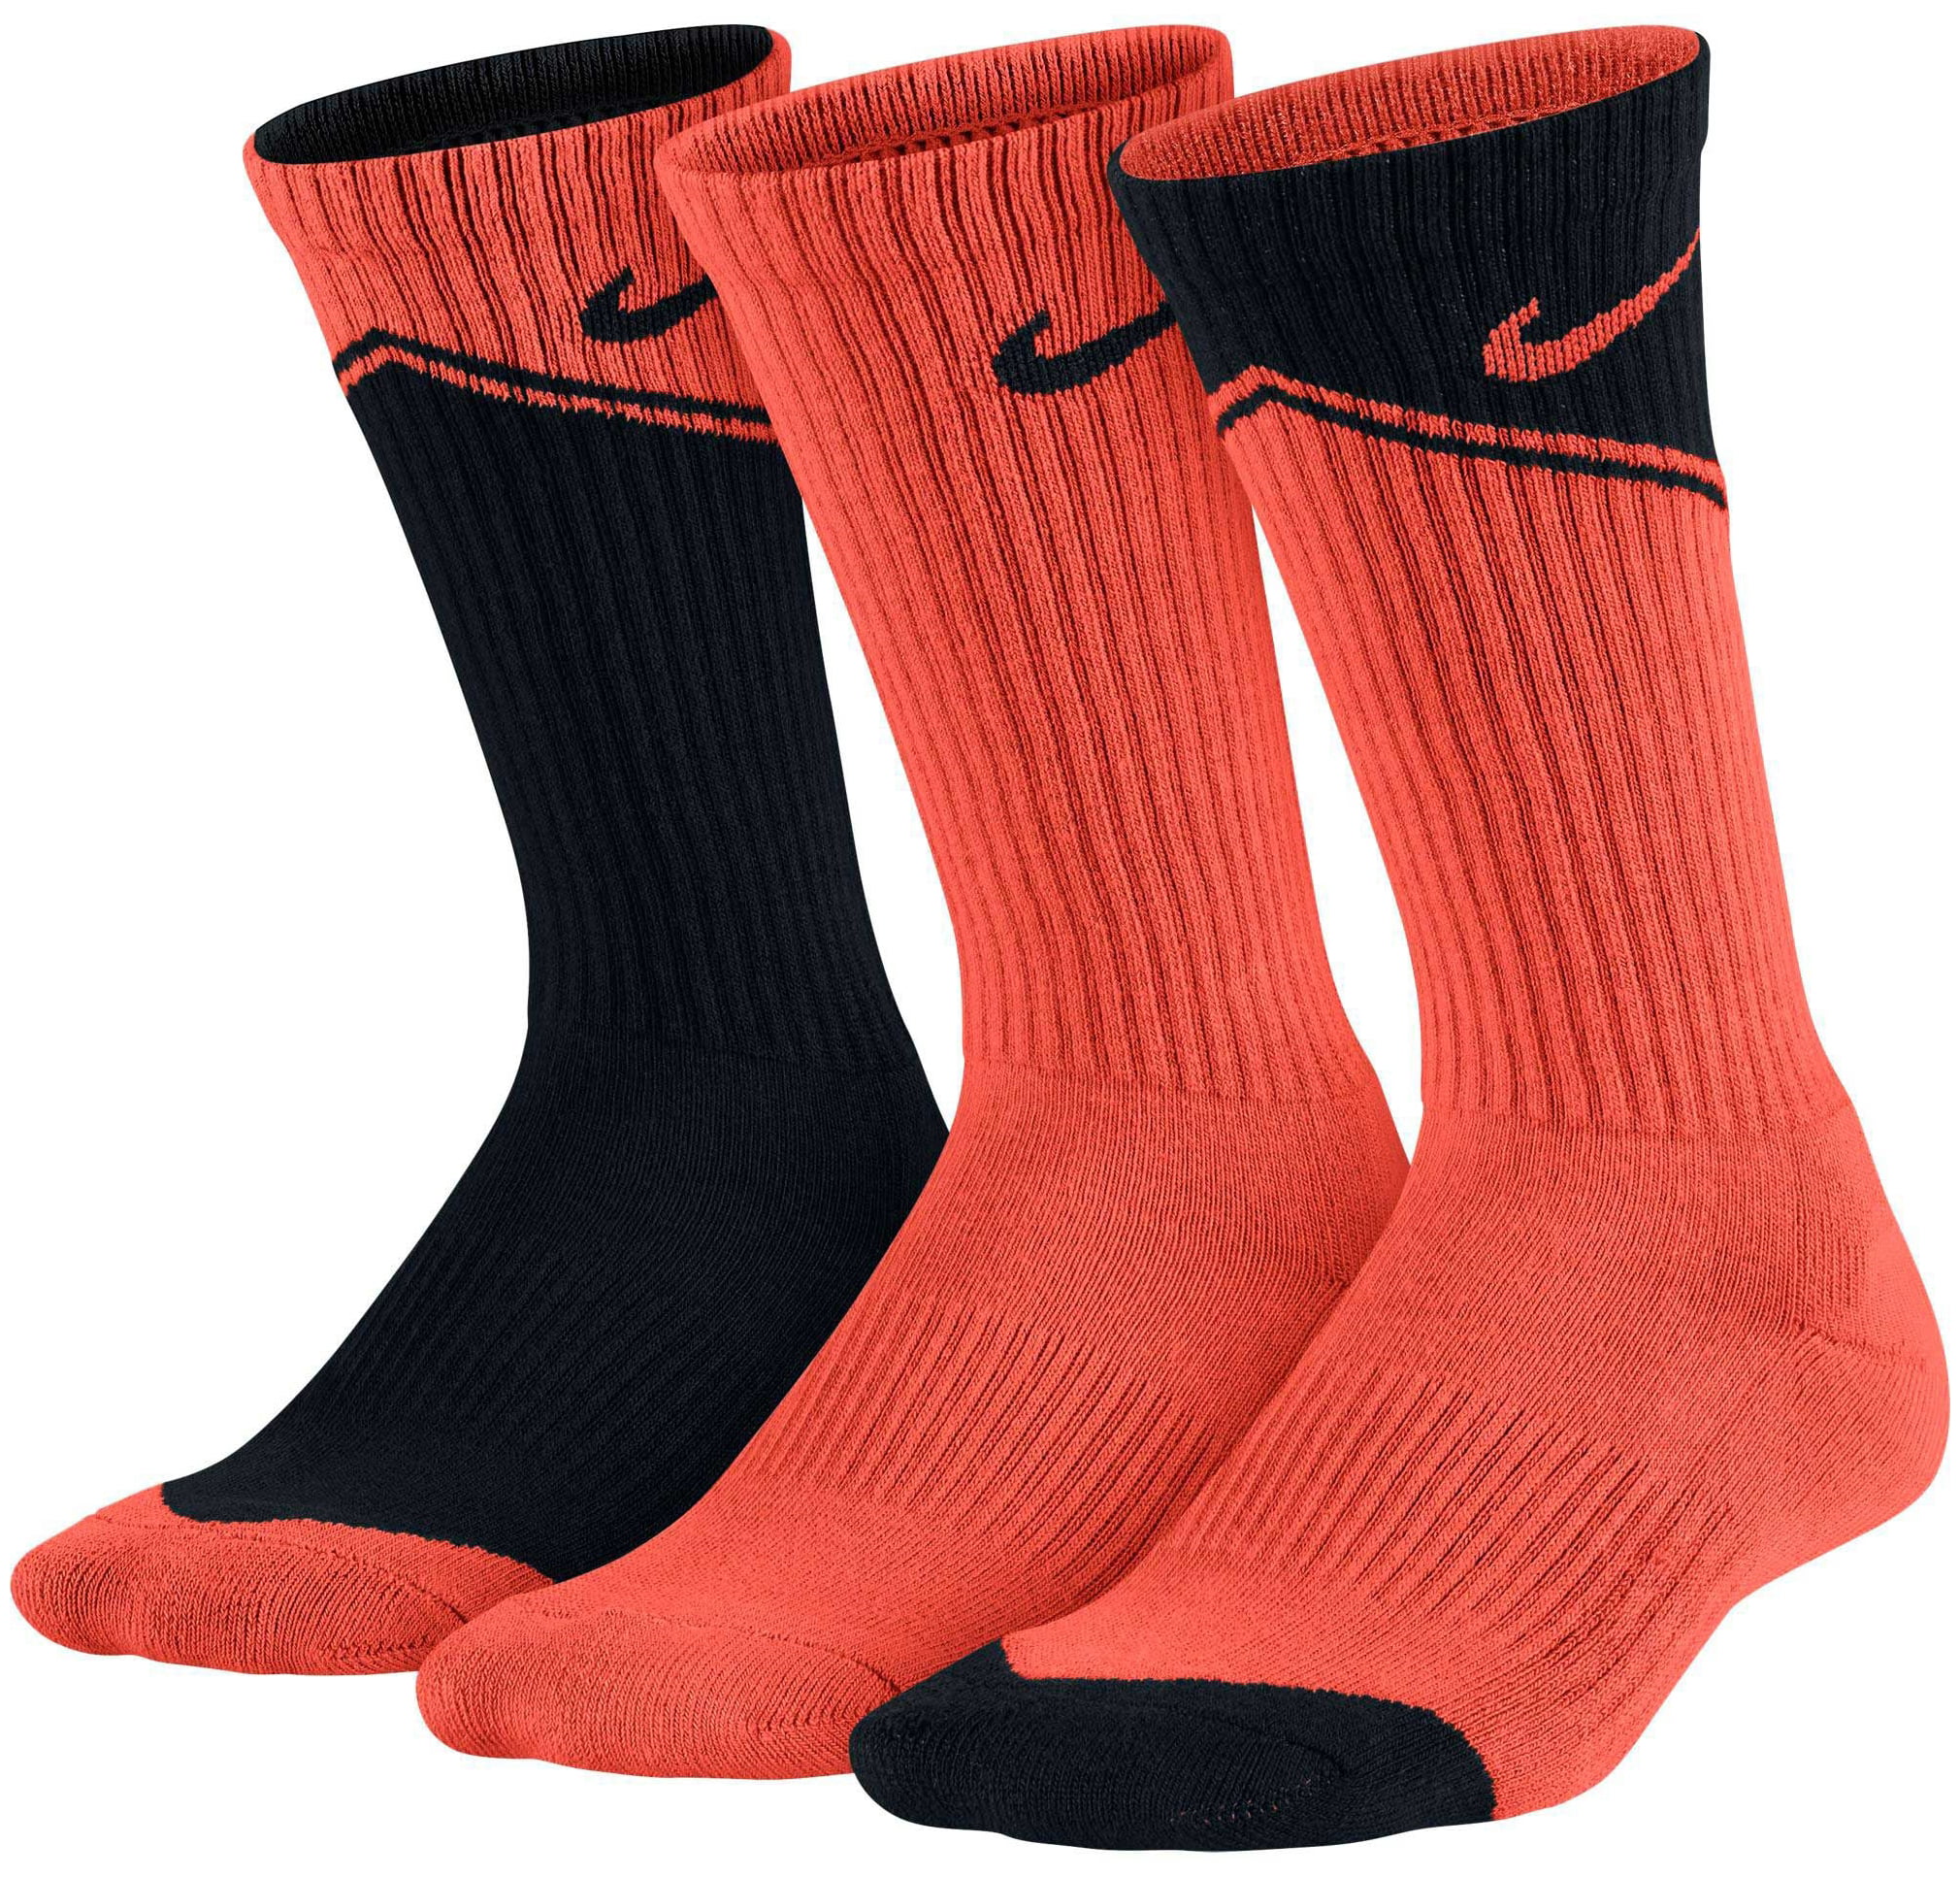 Nike Boys' Performance Cushion Crew Socks 3 Pack Black/Orange/Black